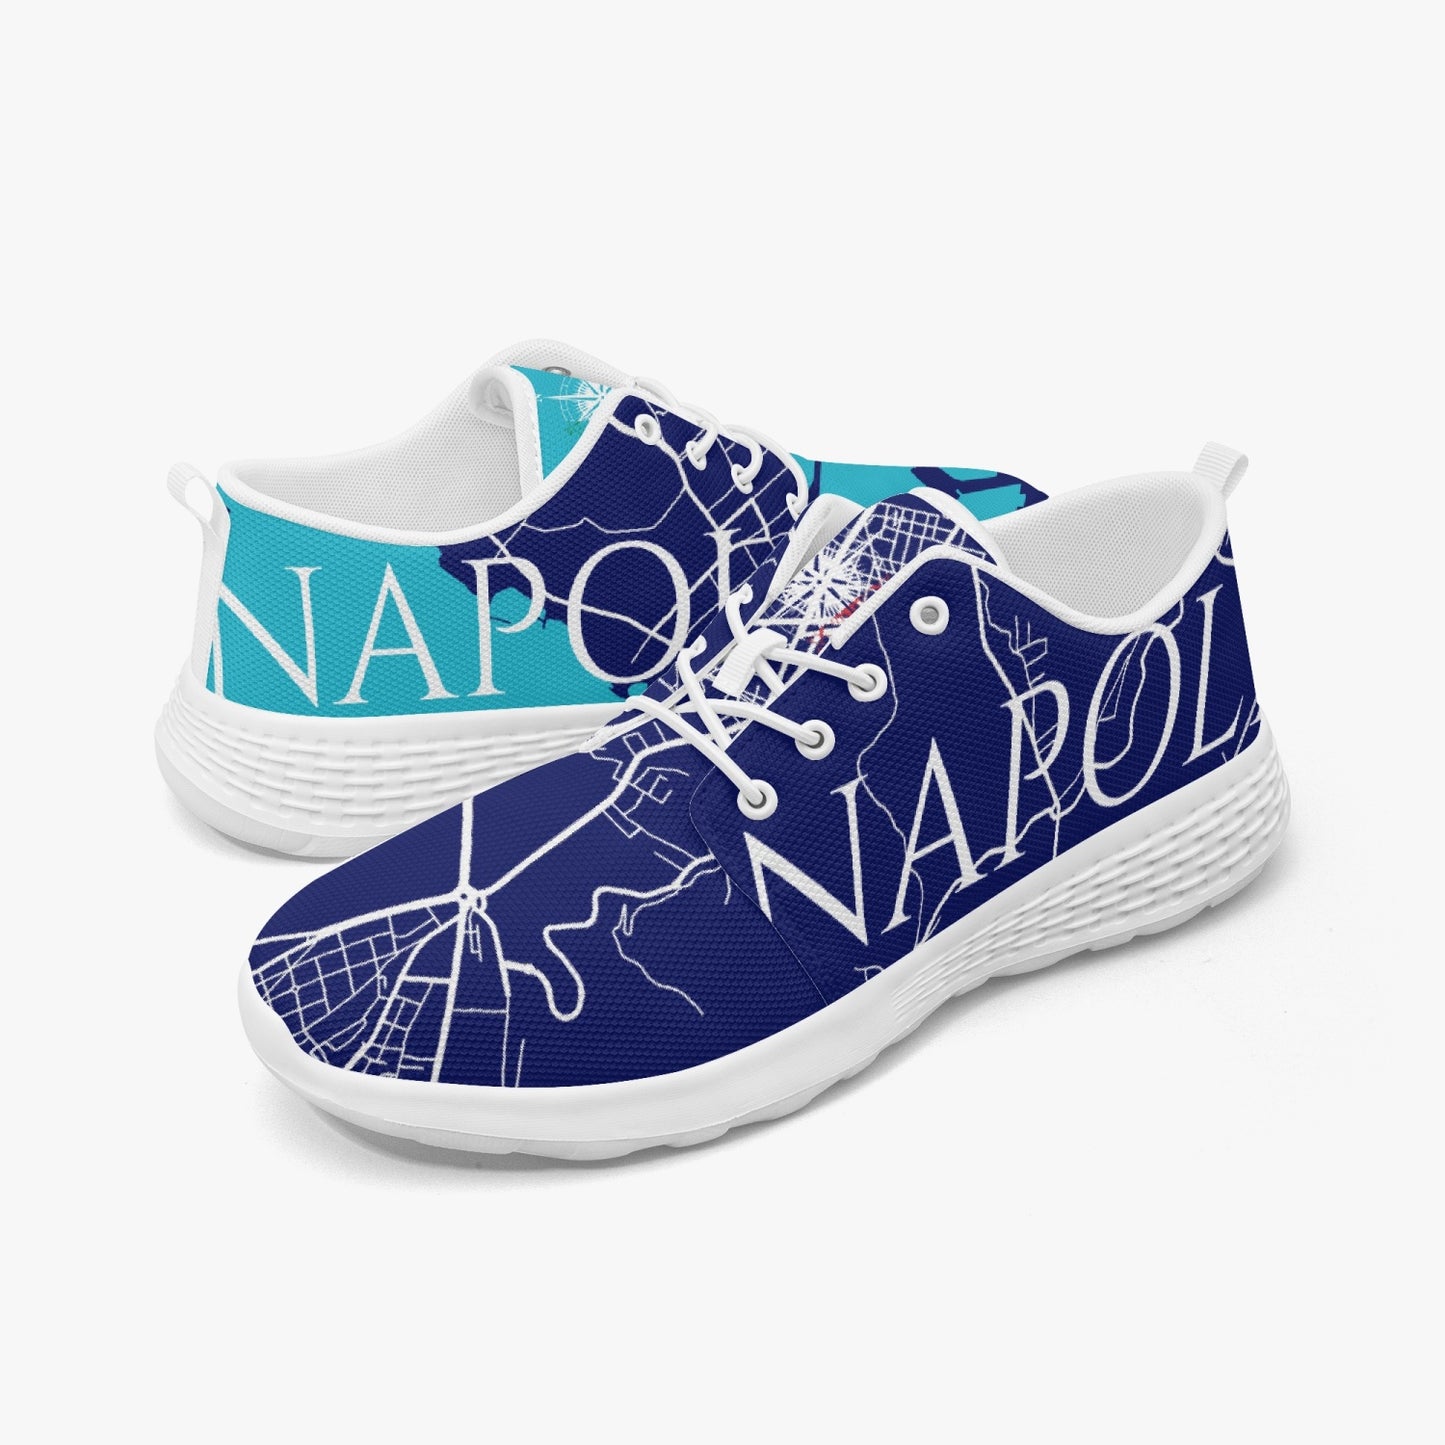 Napoli City Map Running Shoes - men's /women's sizes